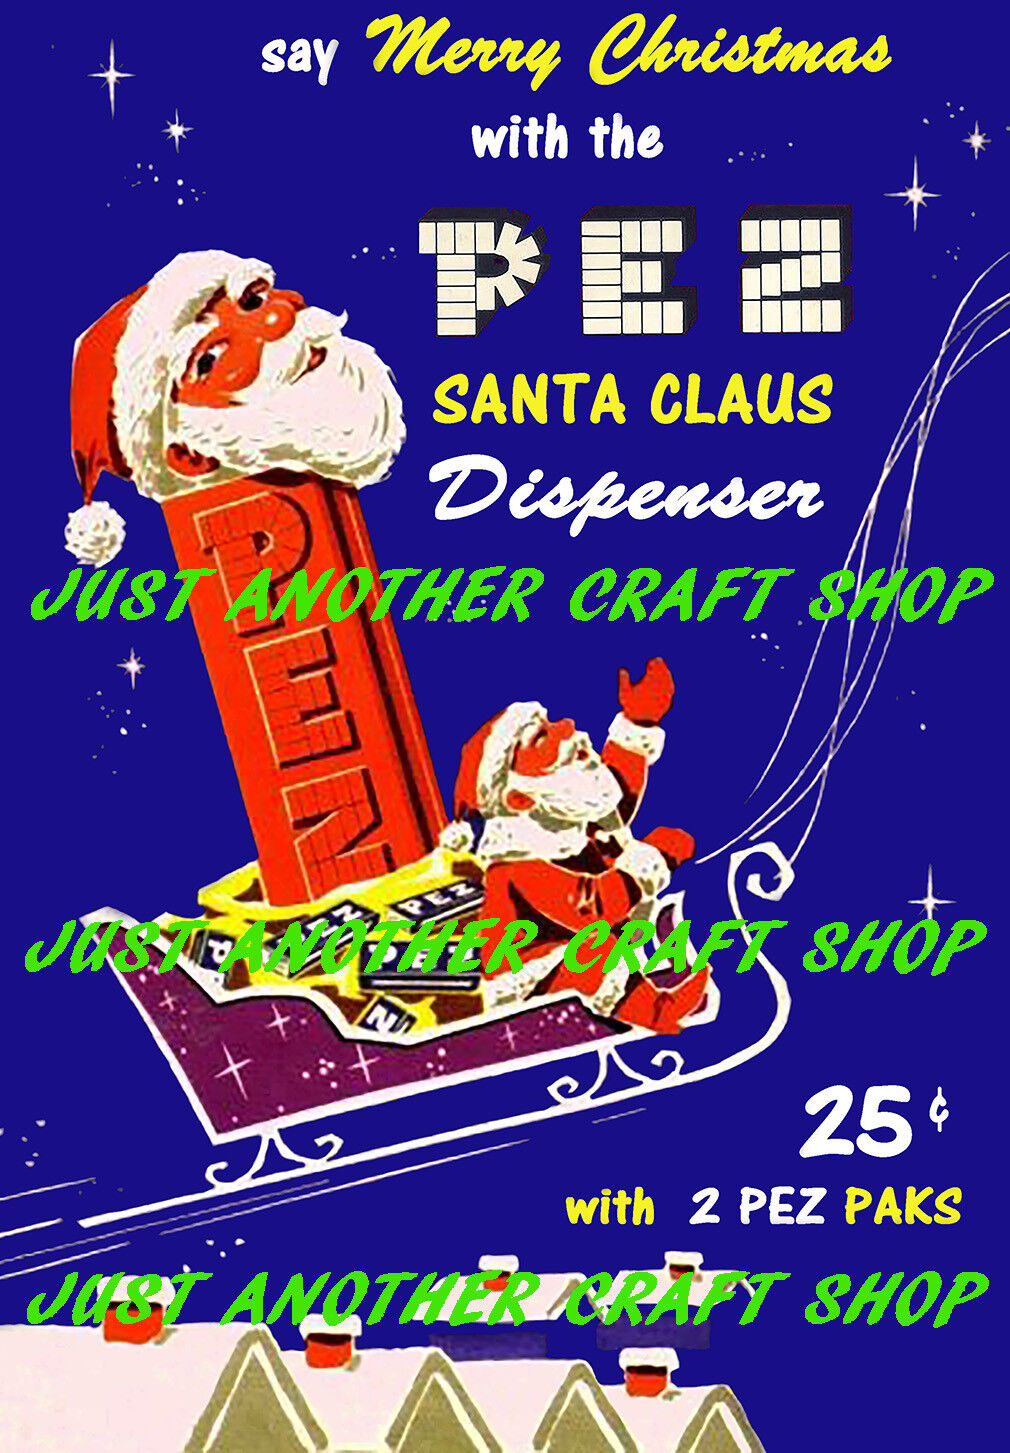 Pez Vintage Santa Claus Candy Dispenser A3 large size Poster Advert Sign Leaflet